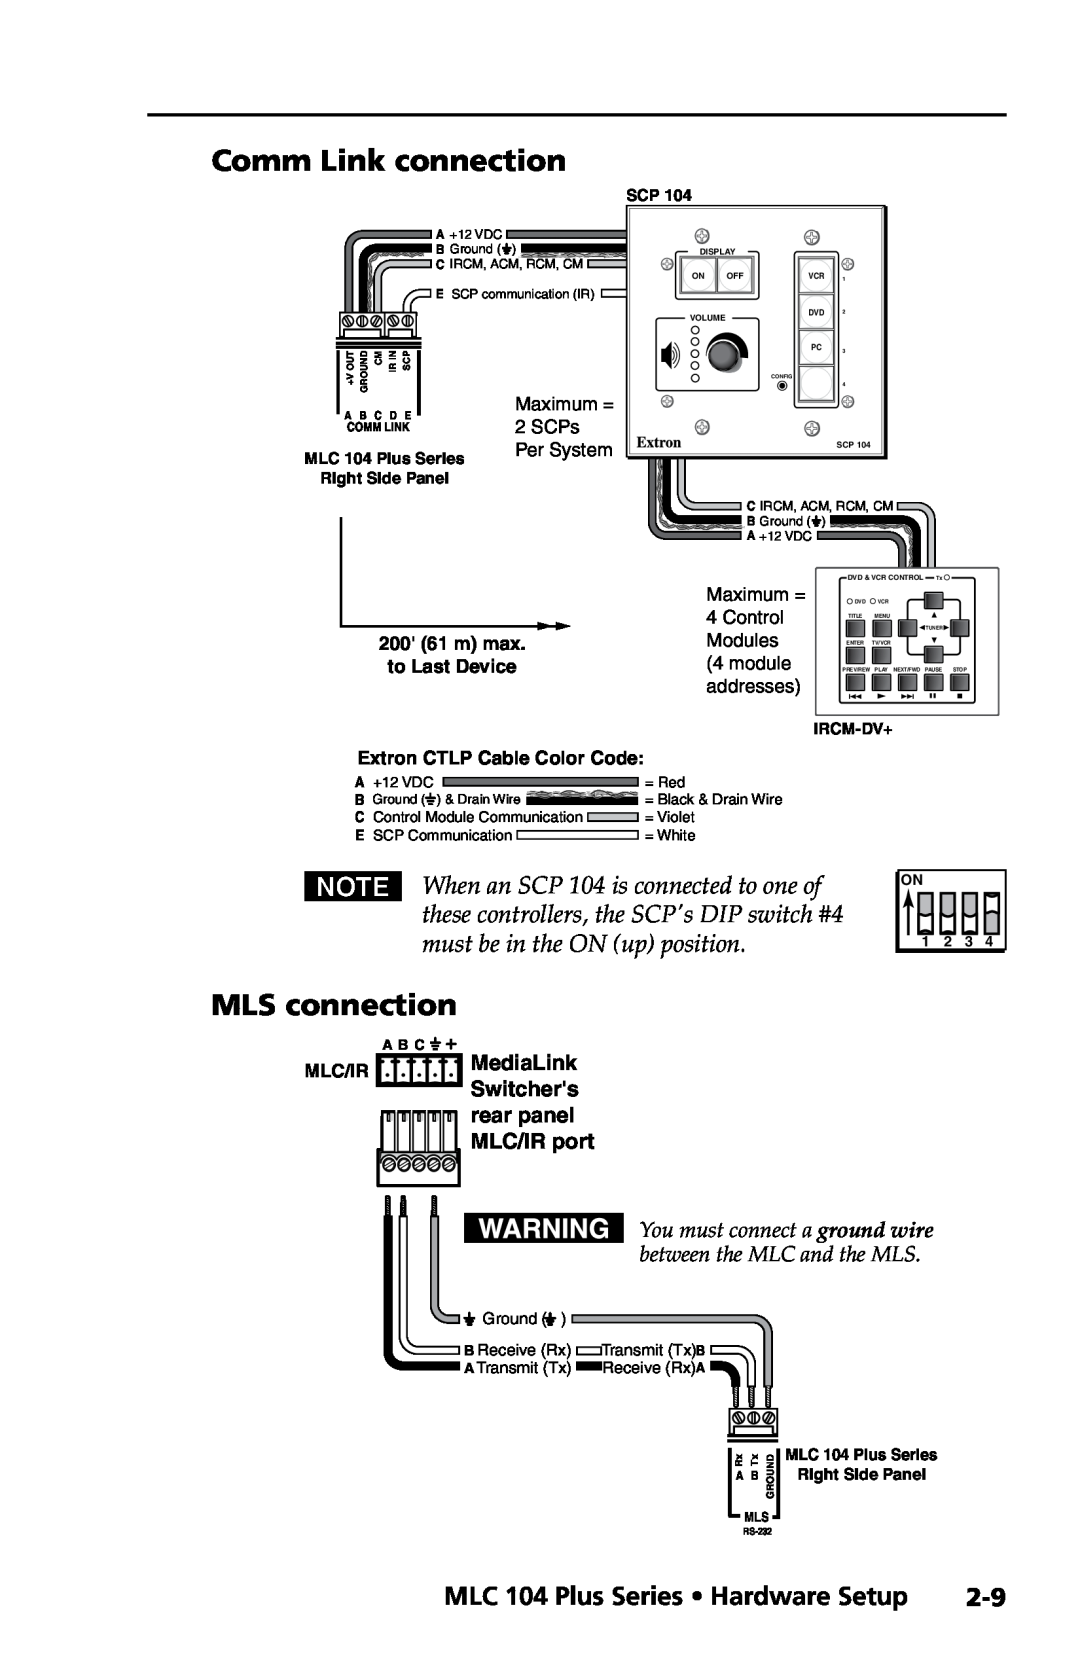 Extron electronic setup guide Comm Link connection, MLS connection, MLC 104 Plus Series Hardware Setup 